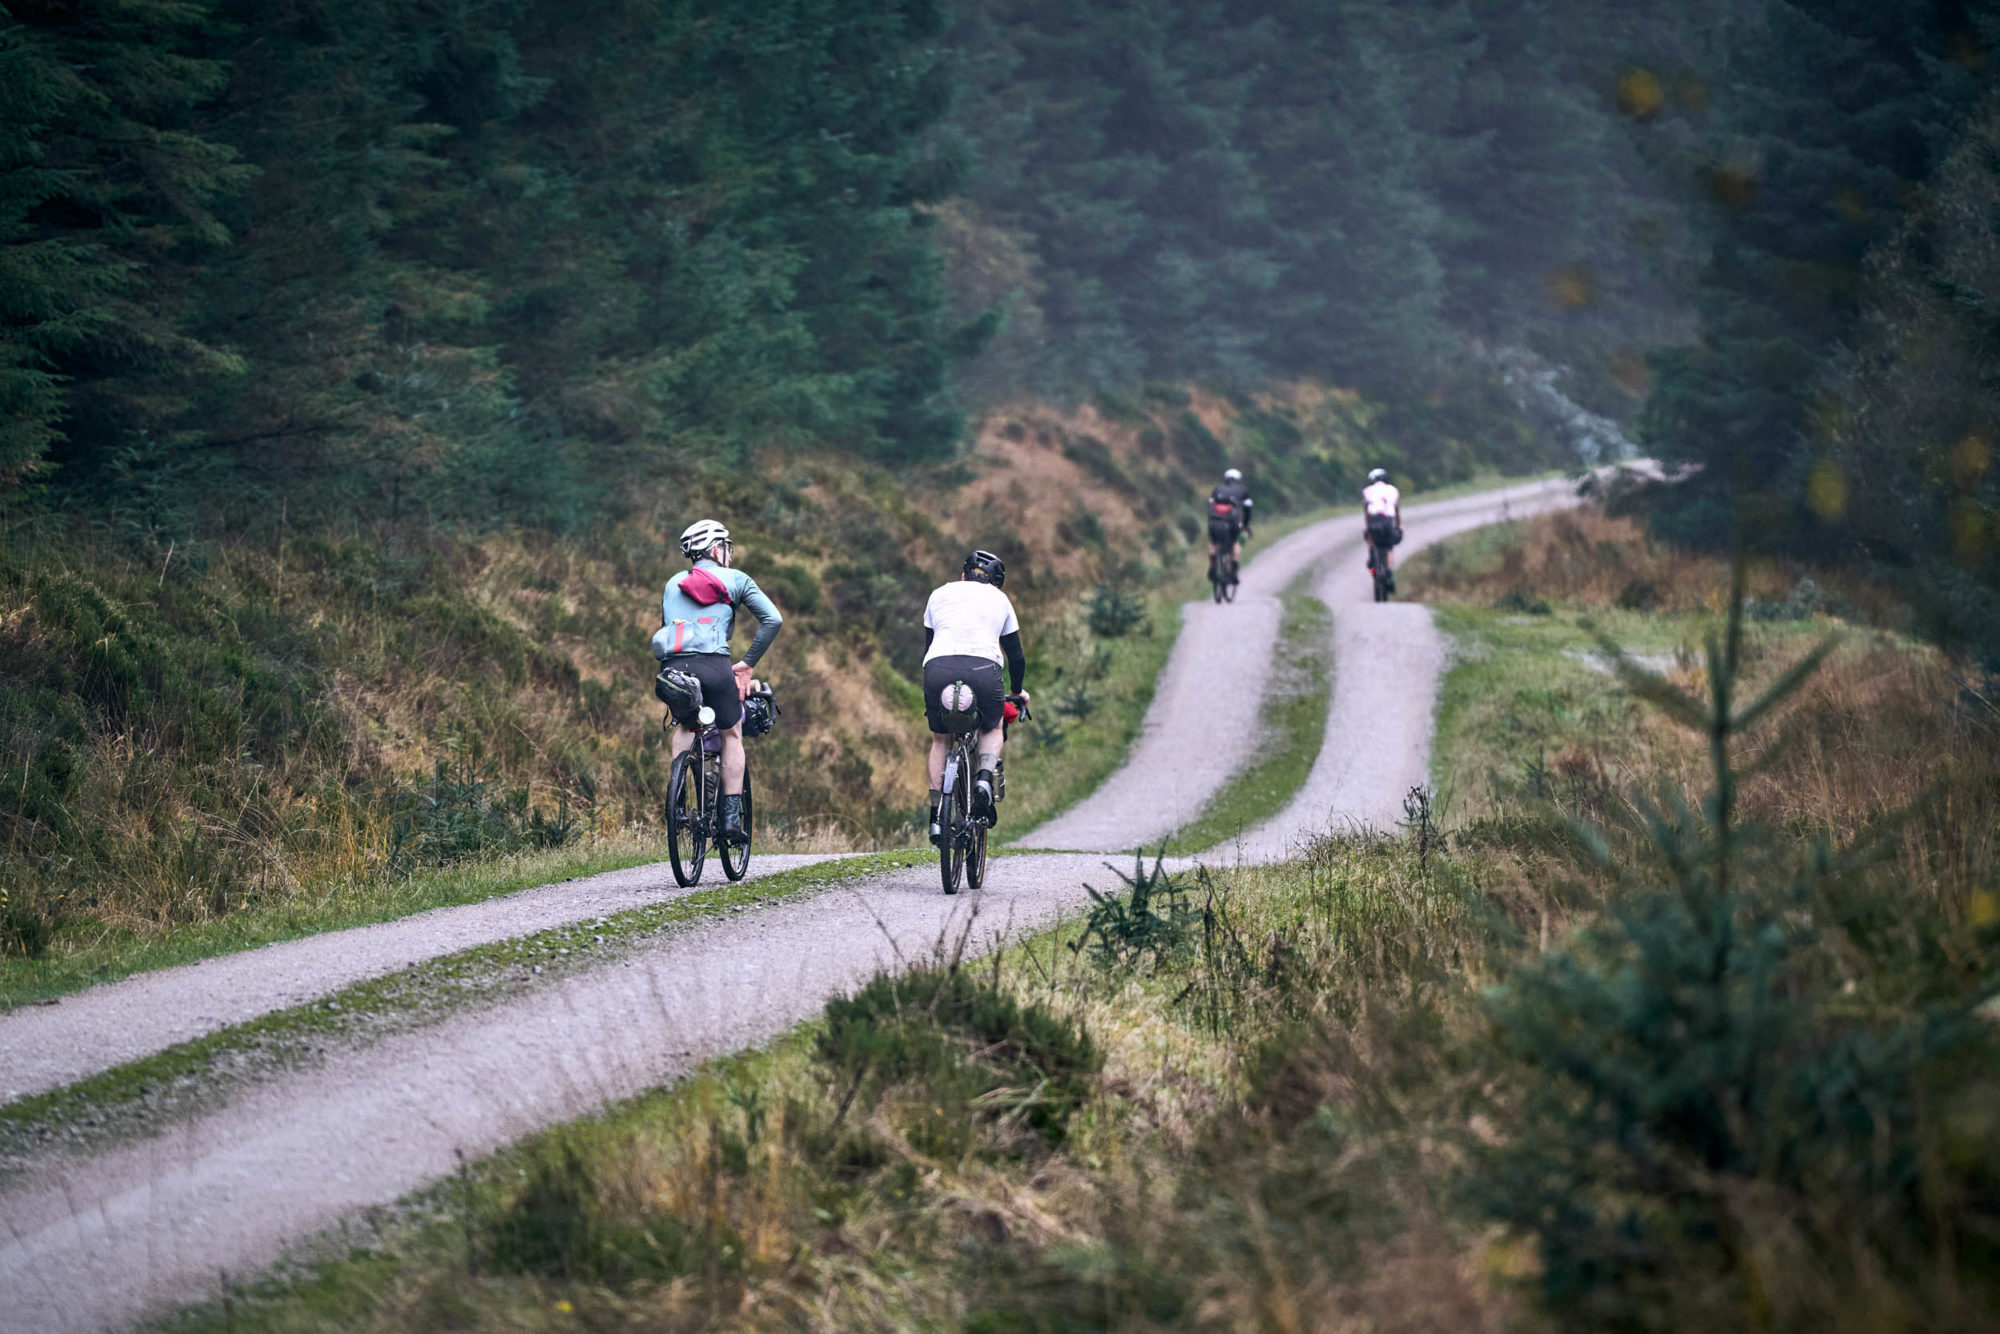 White Laggan, Doug Somerville, Bikepacking Scotland